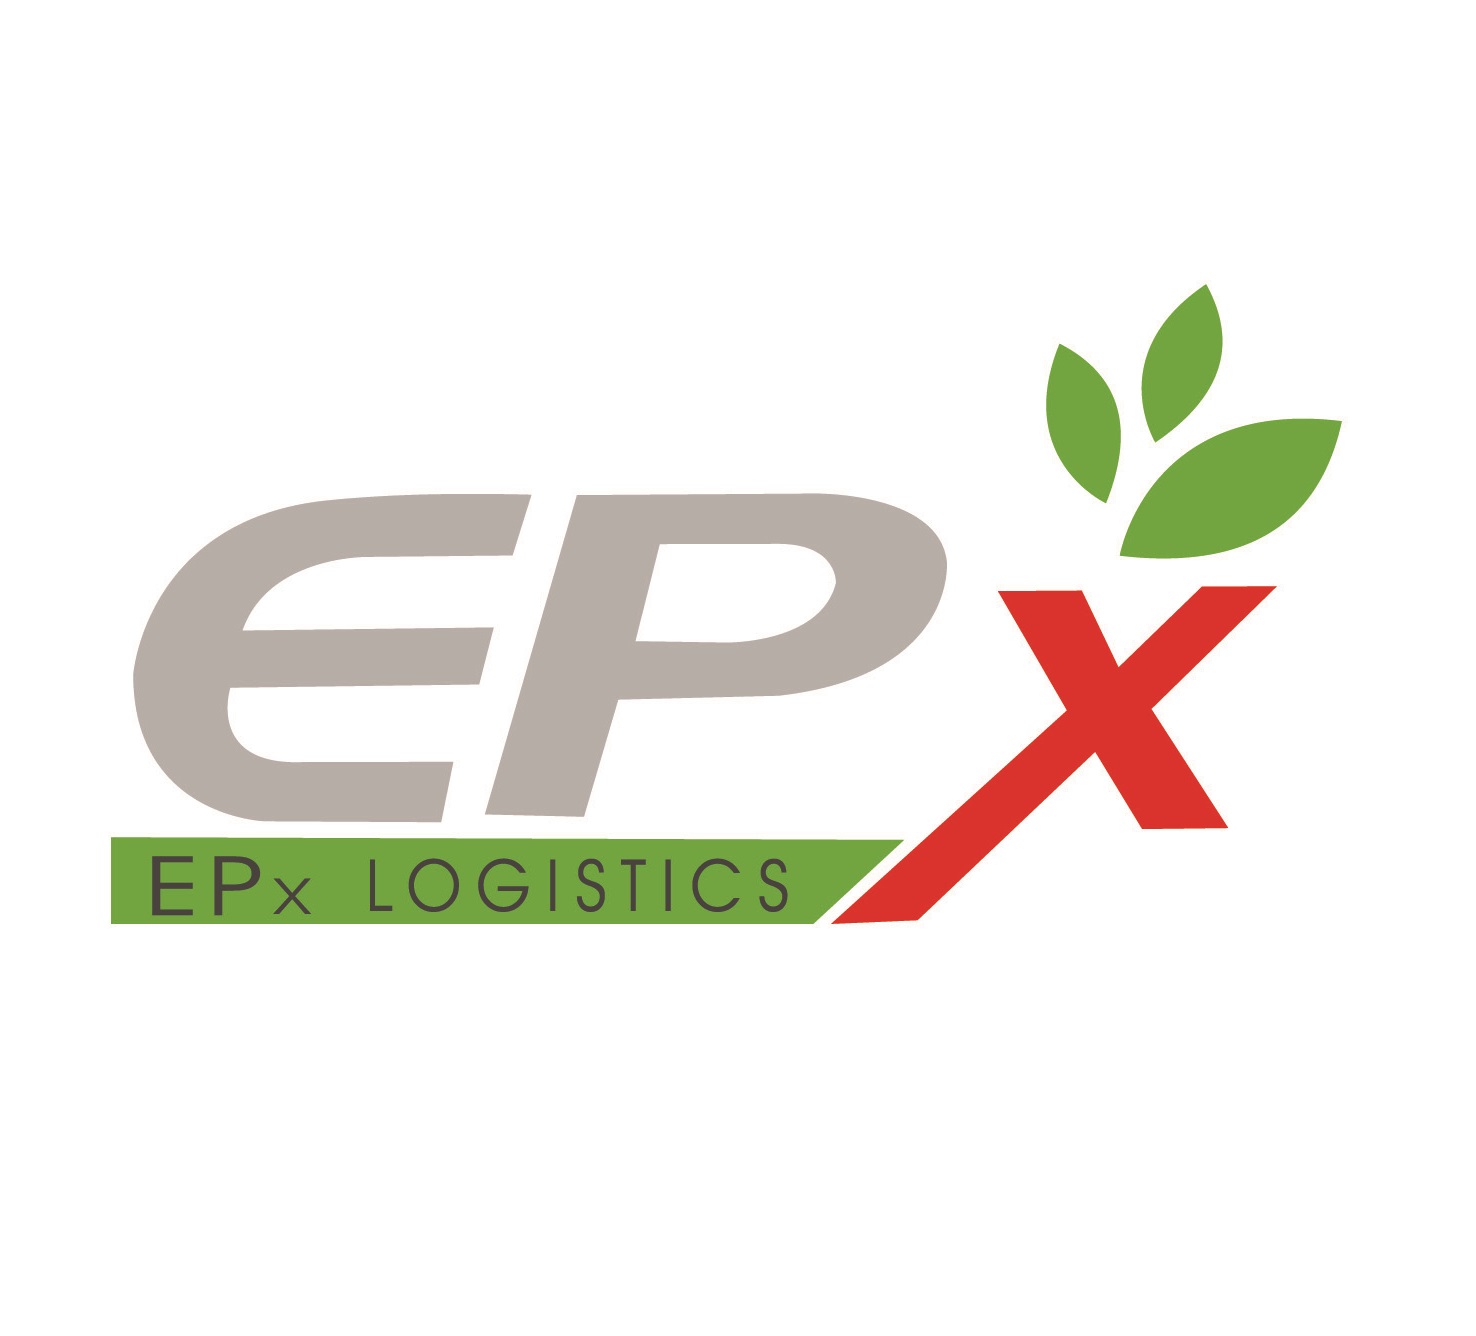 EPx logistics